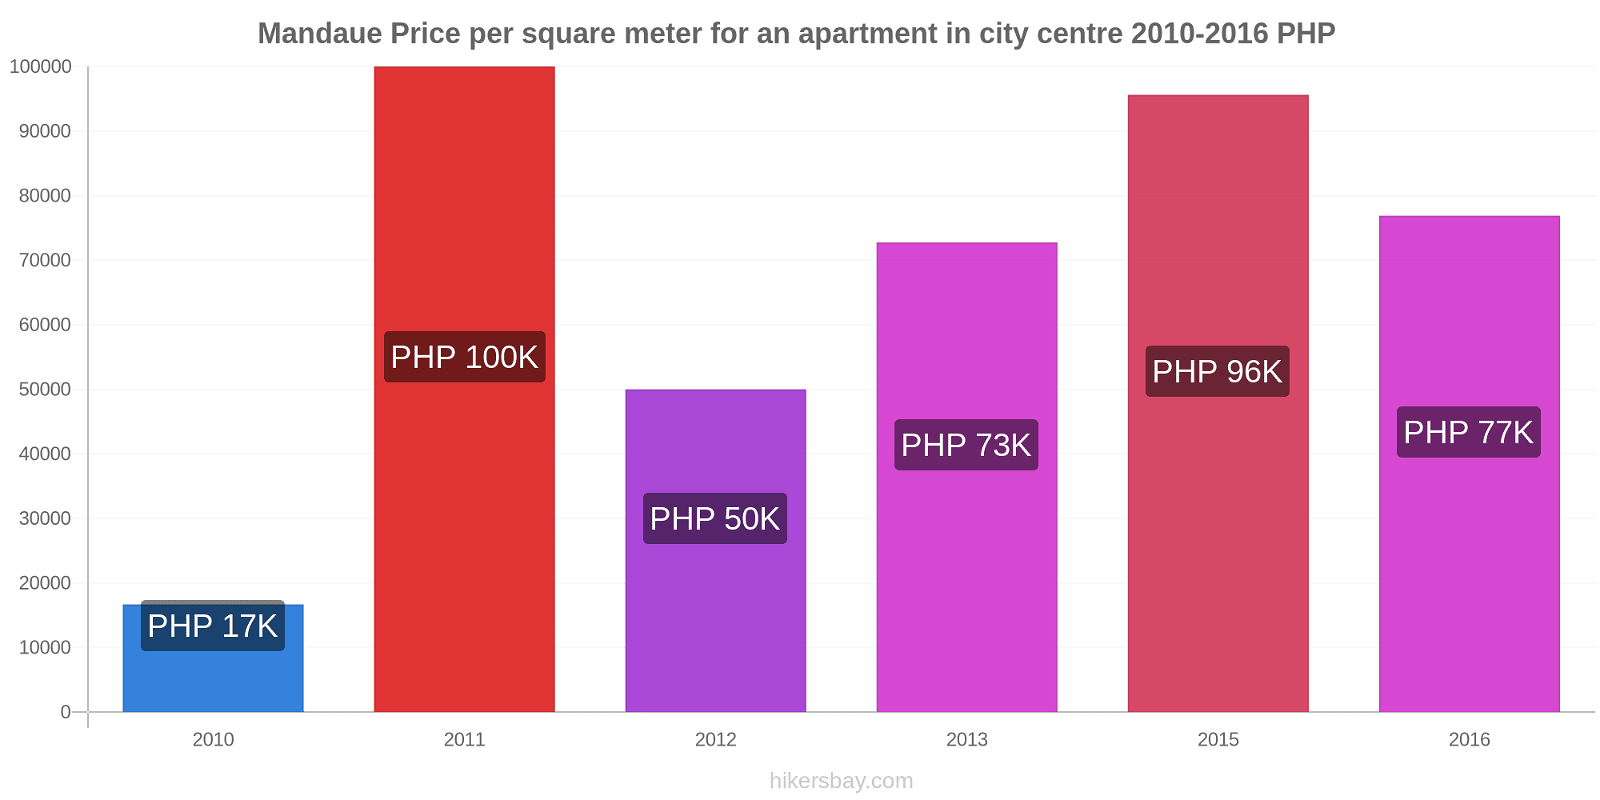 Mandaue price changes Price per square meter for an apartment in city centre hikersbay.com